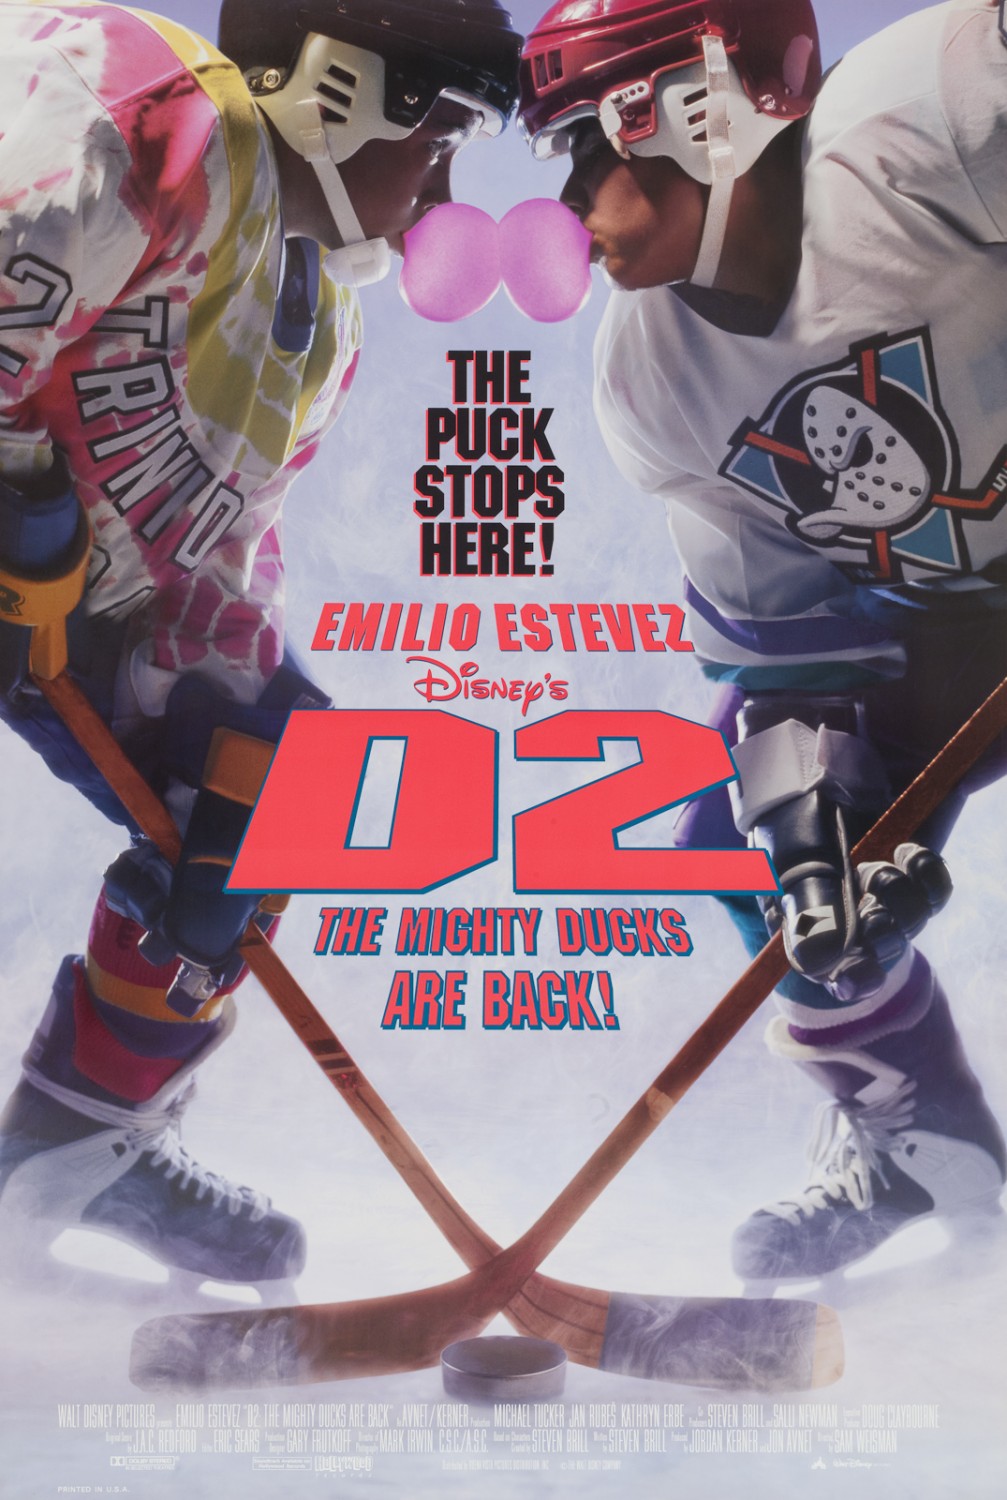 Hockey team to commemorate Mighty Ducks movies with three jerseys